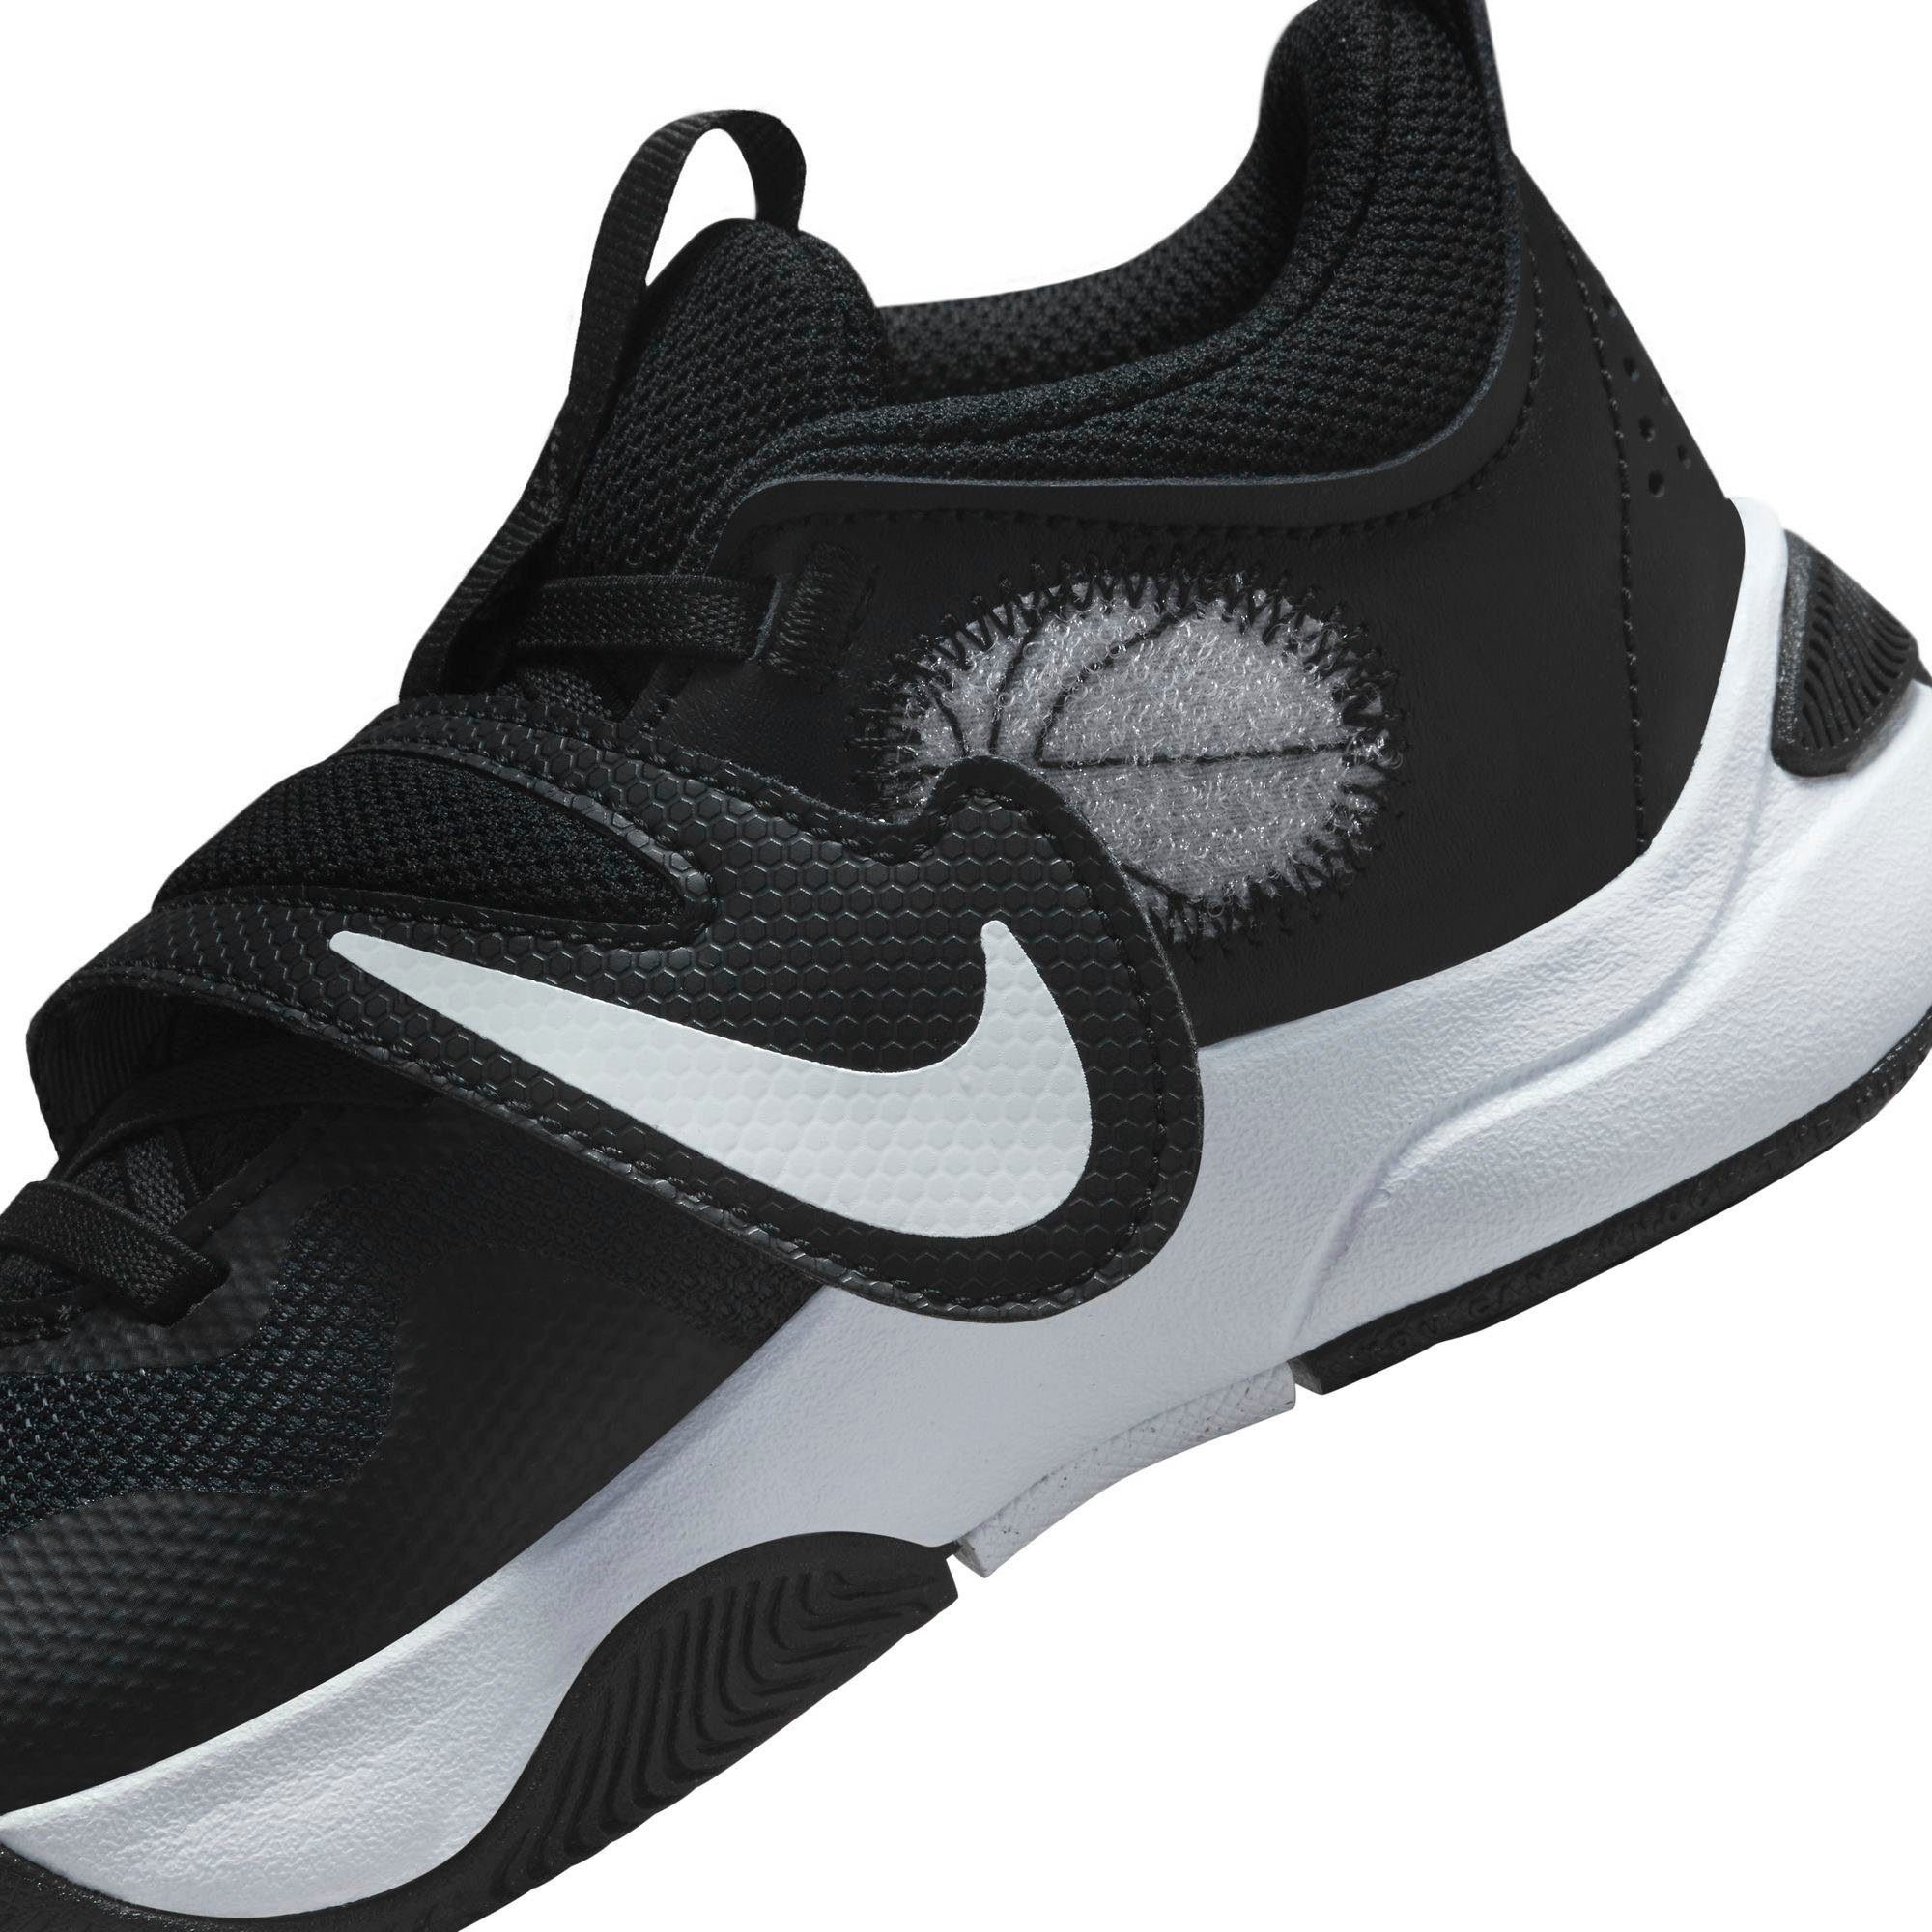 HUSTLE D (PS) Nike 11 Basketballschuh black/white TEAM